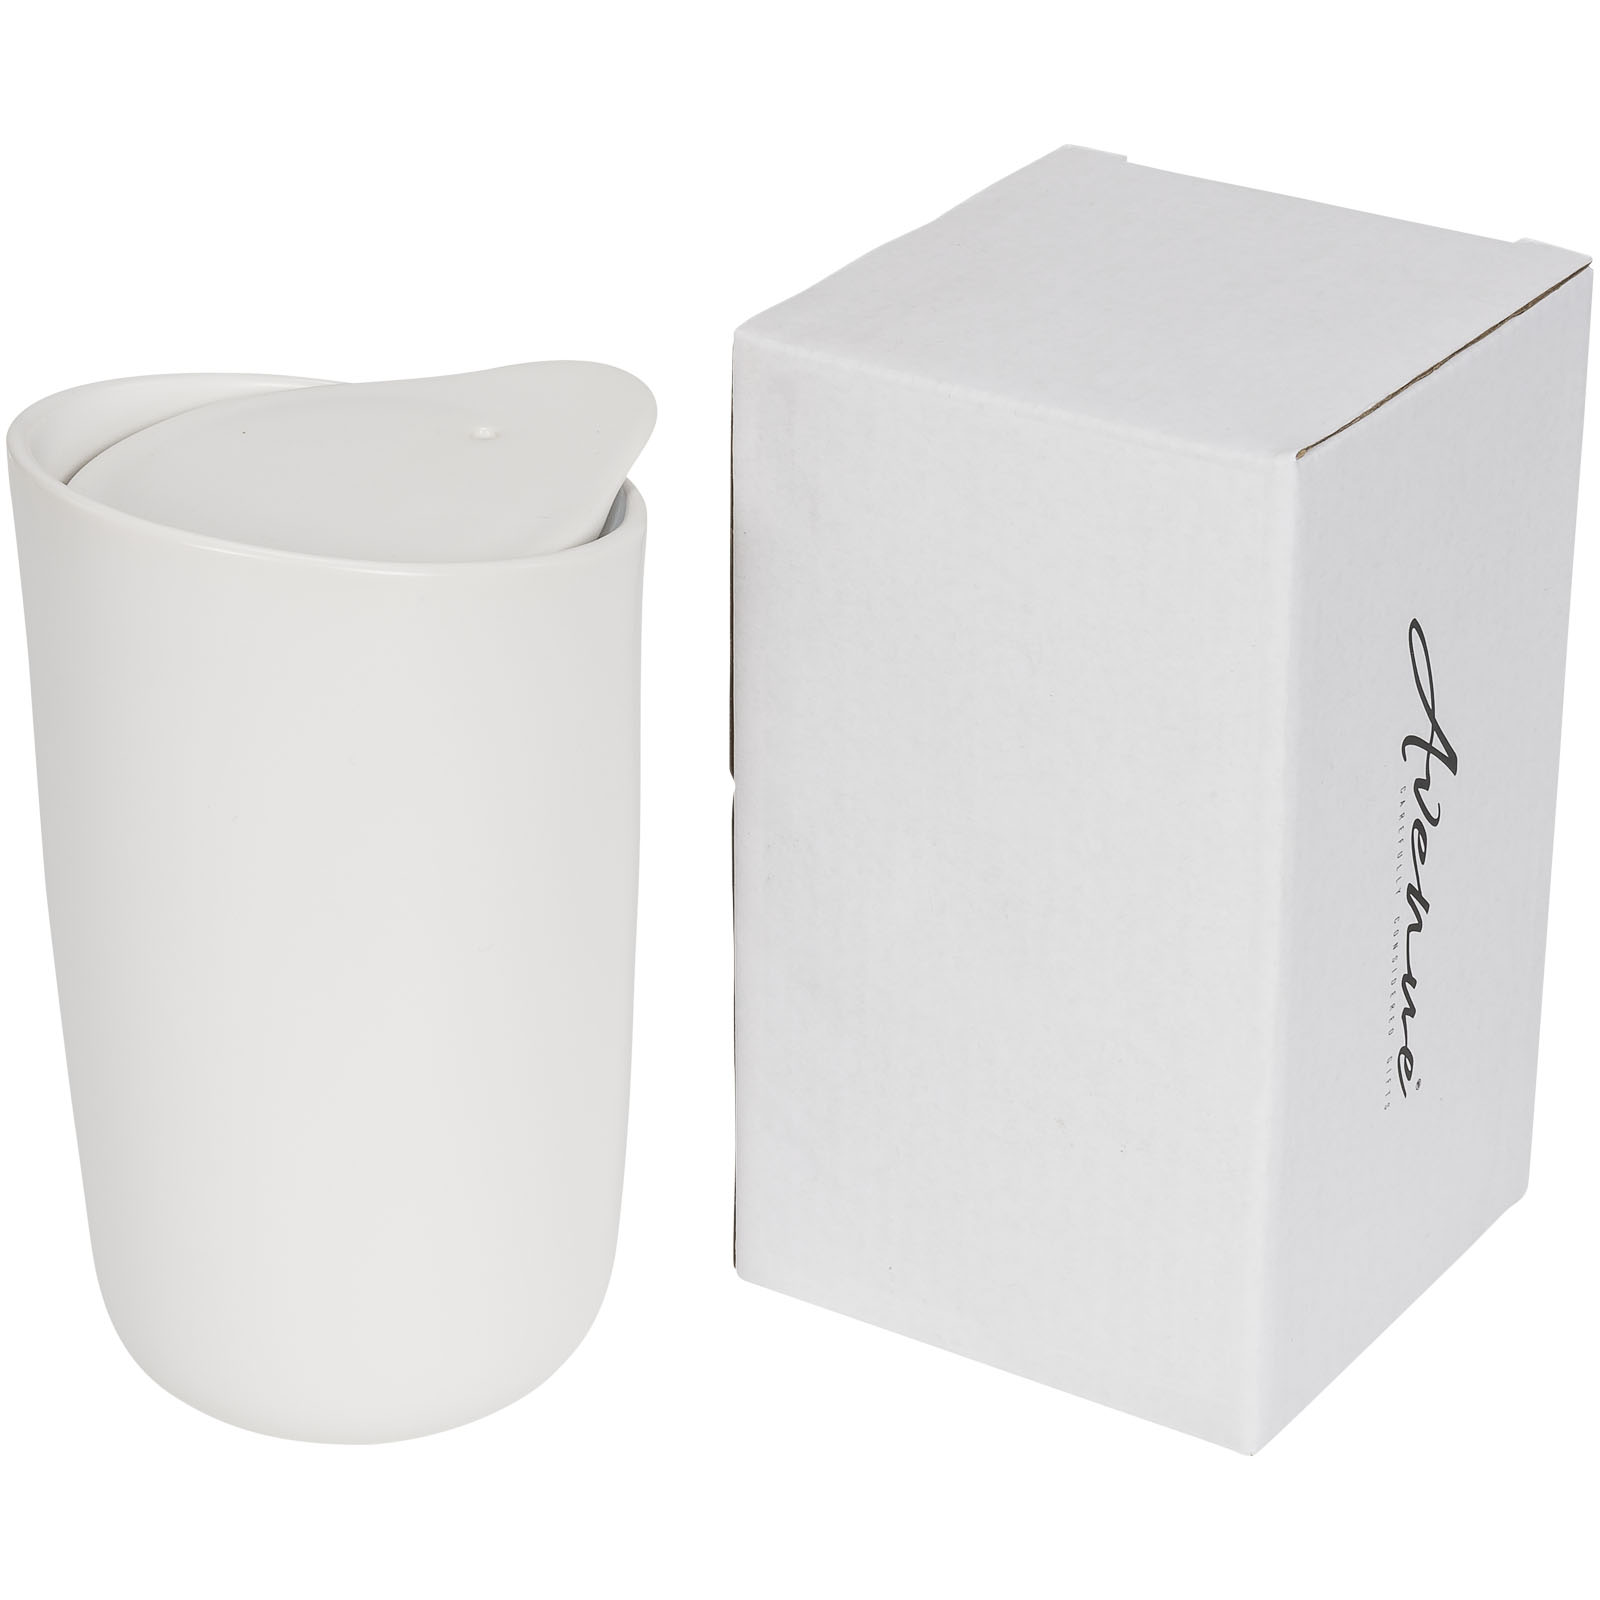 Ceramic double wall mug CHITTENDEN, 400 ml